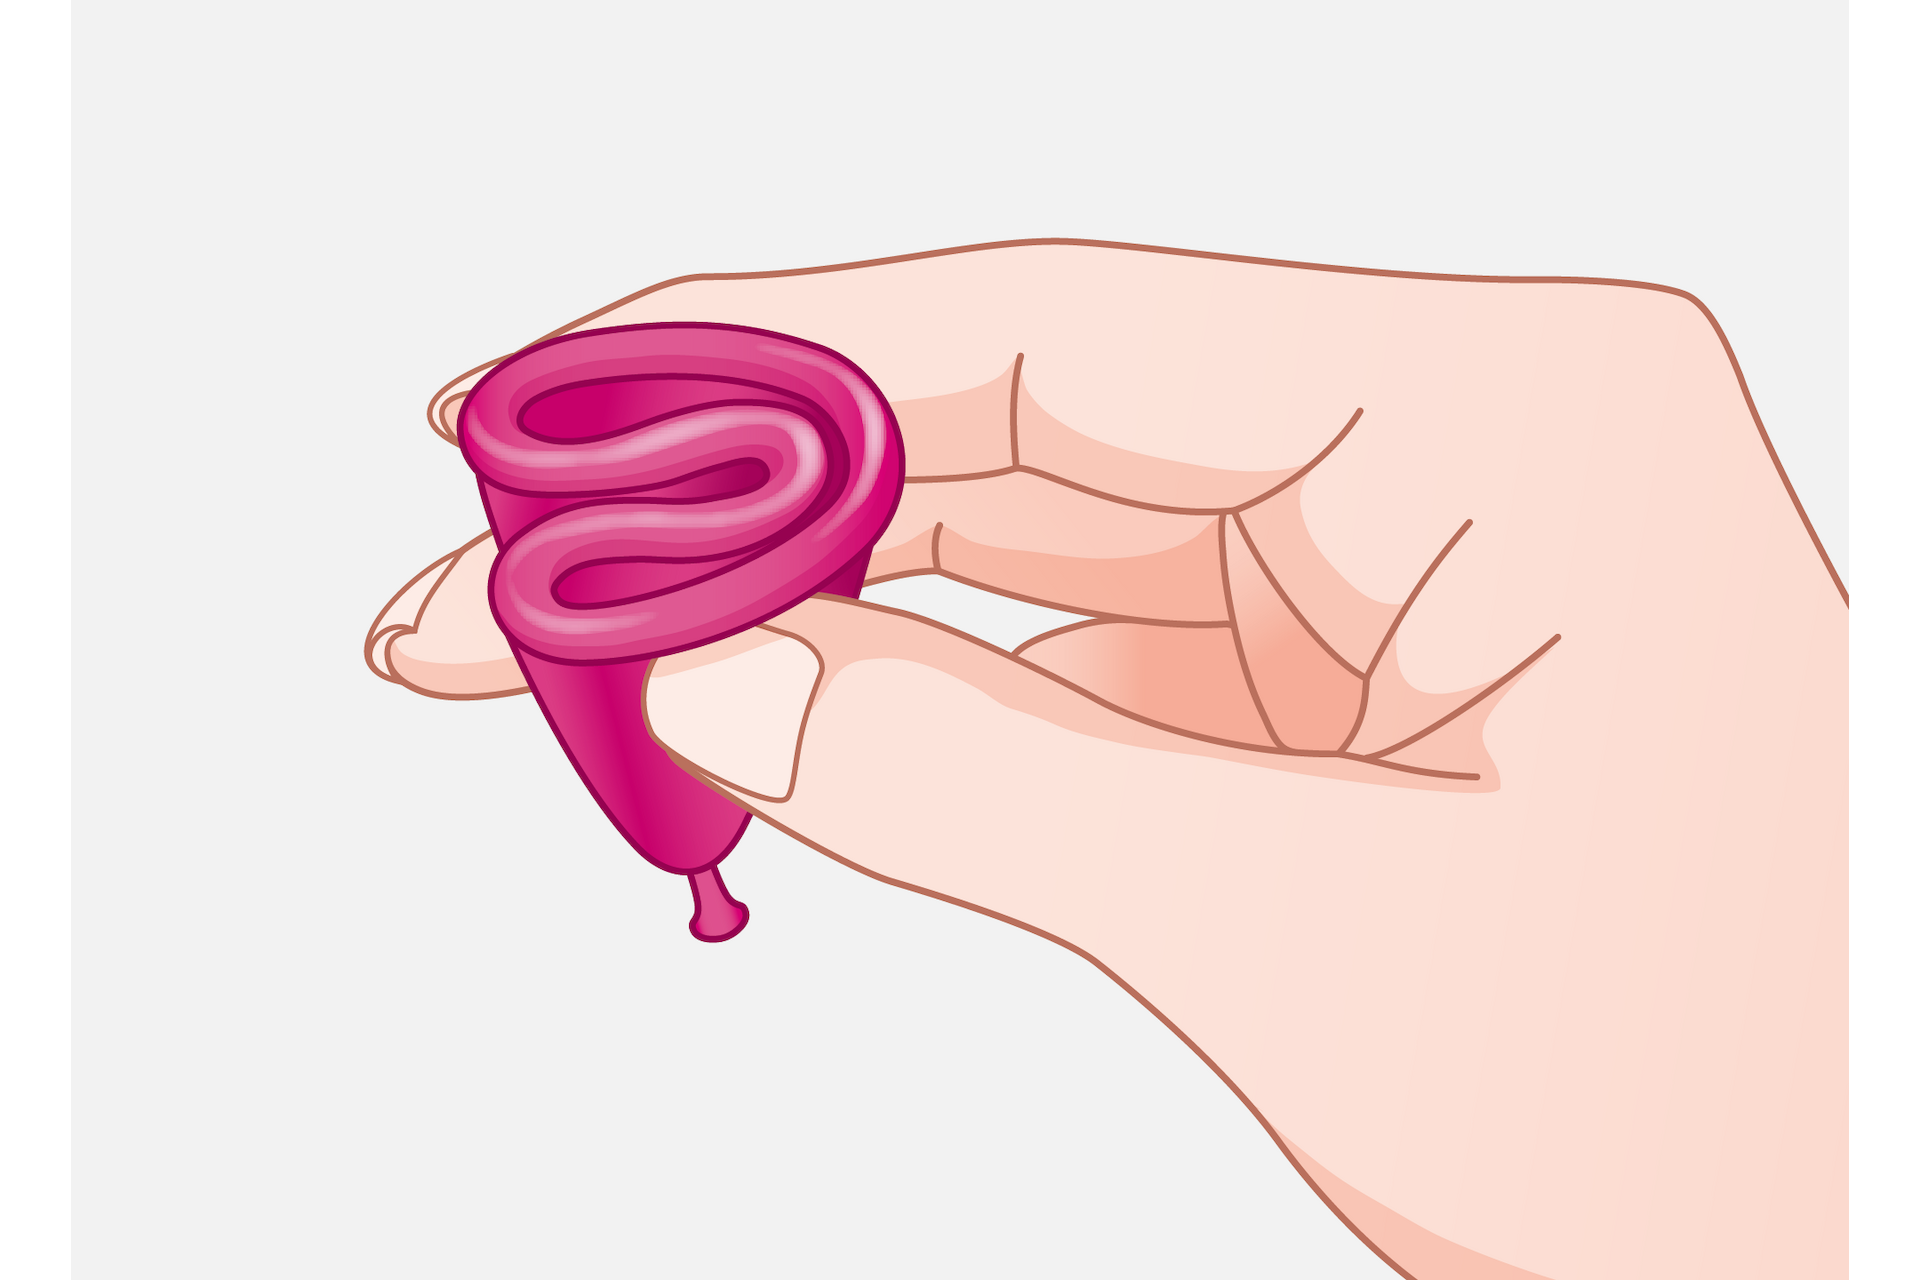 Tulipa Menstruationstasse Größe 2